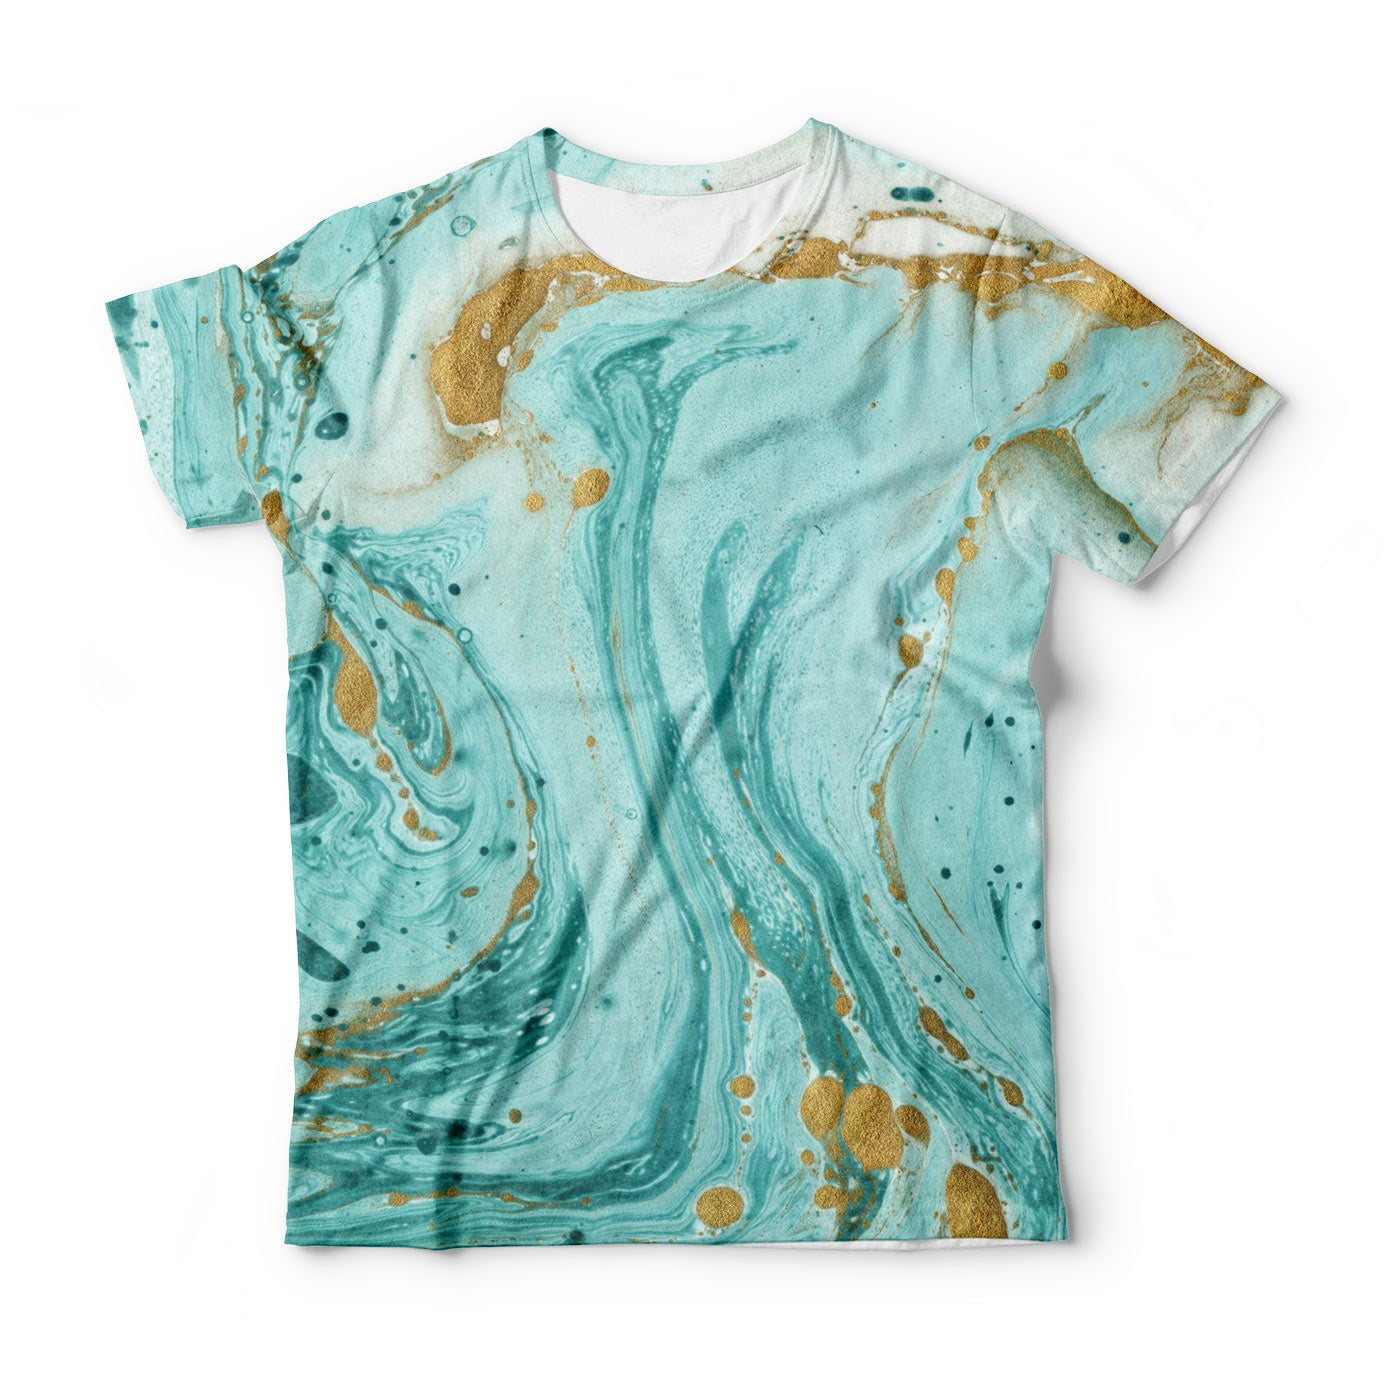 Decorative Marble Texture T-Shirt